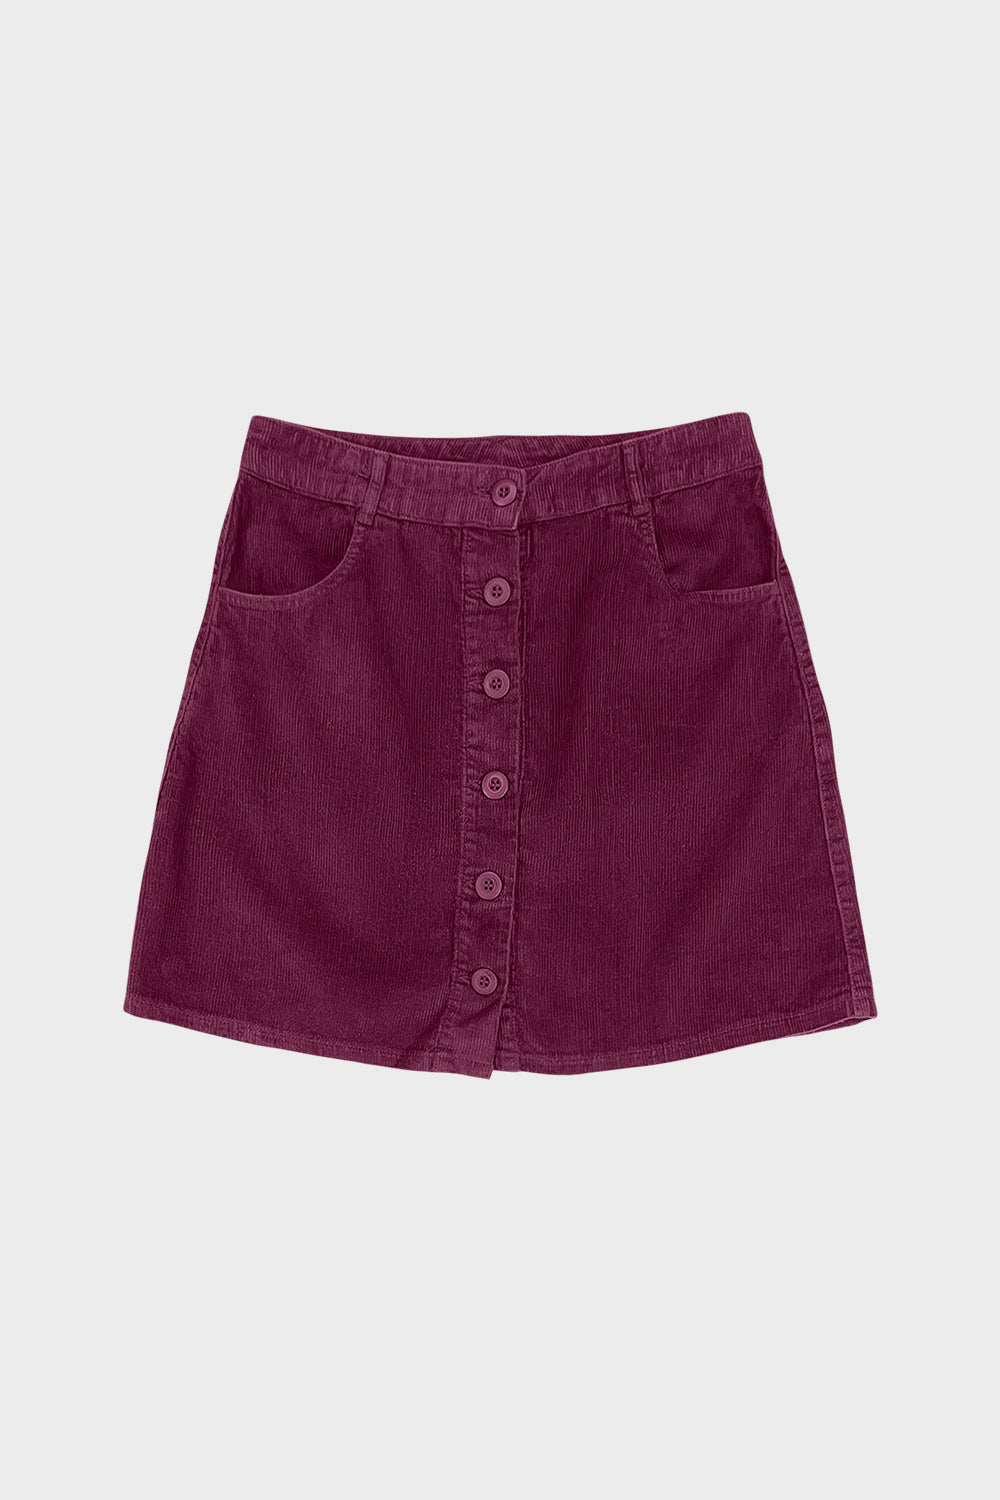 Corduroy Vassar Skirt | Jungmaven Hemp Clothing & Accessories / Color: Burgundy